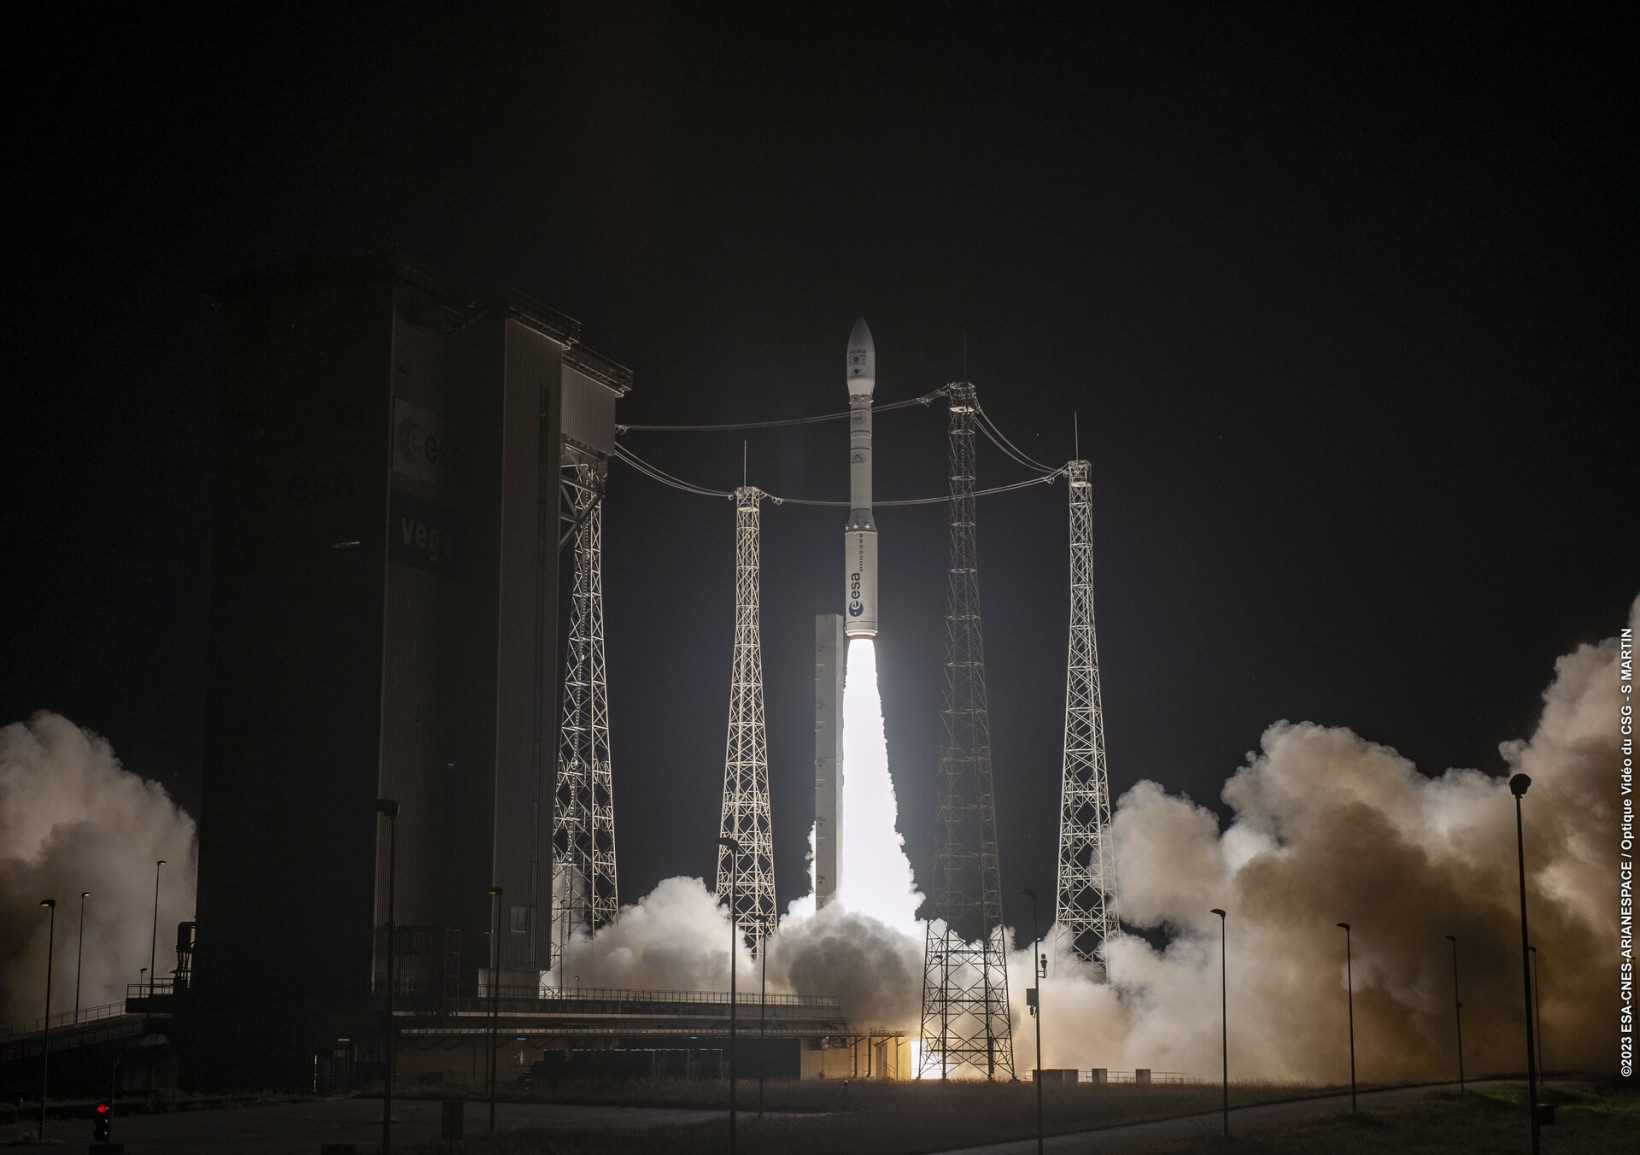 A photo of the Vega rocket launching